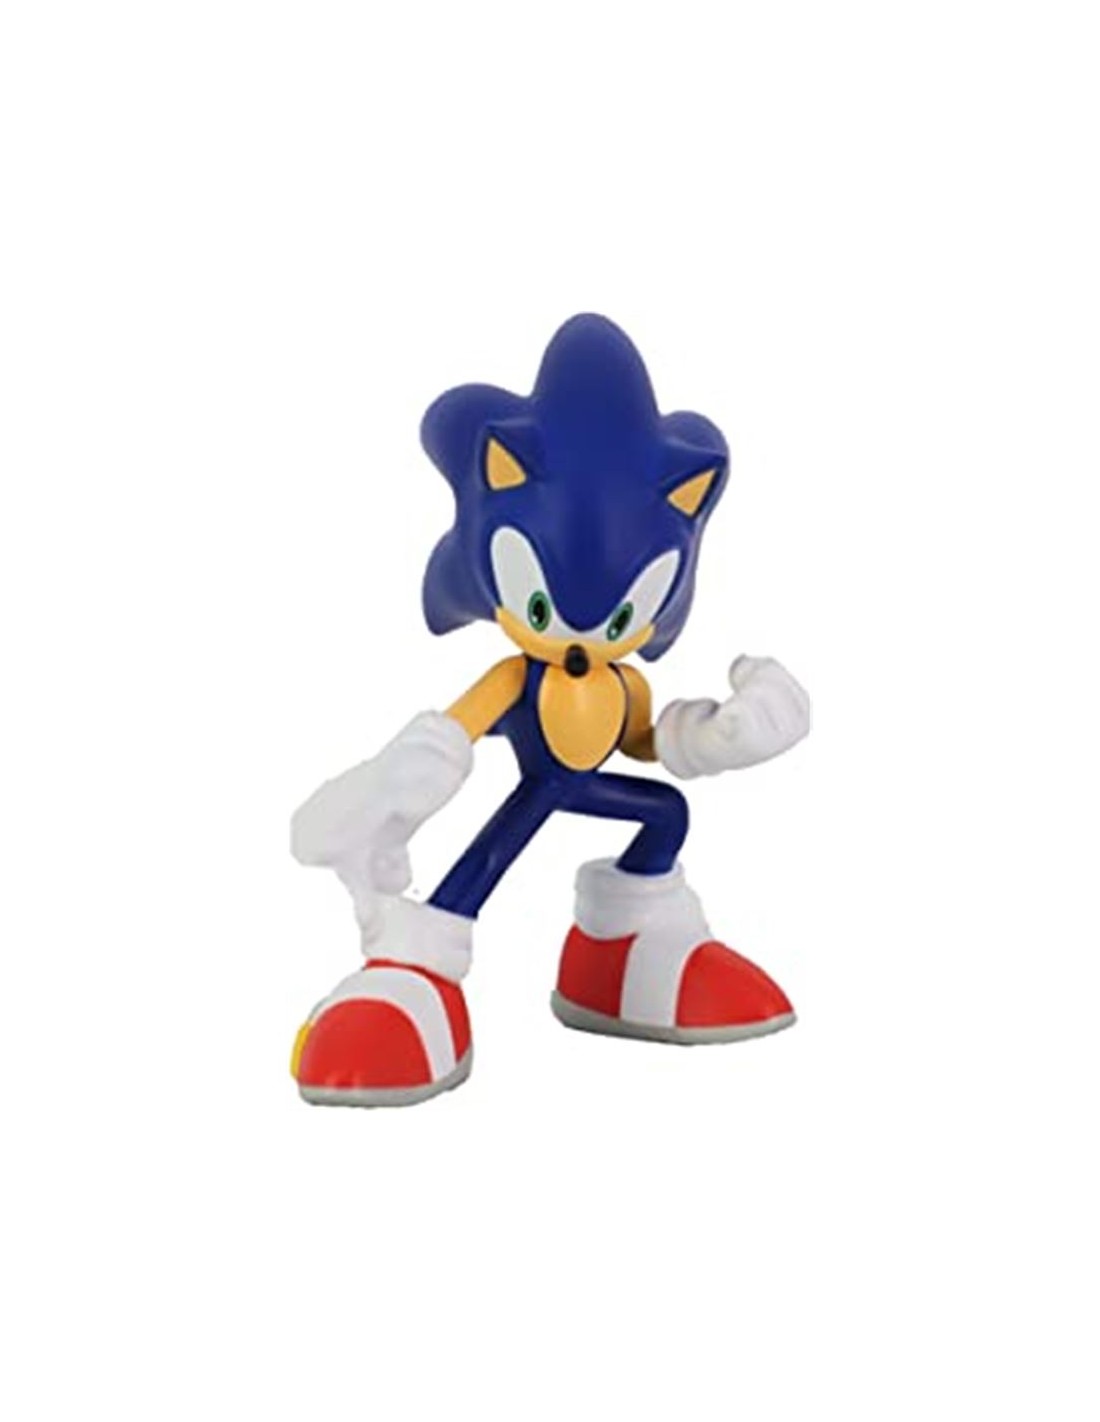 5 7cm Toy Sonic Diversas Opciones Sonic Figuras Juguetes Sonic